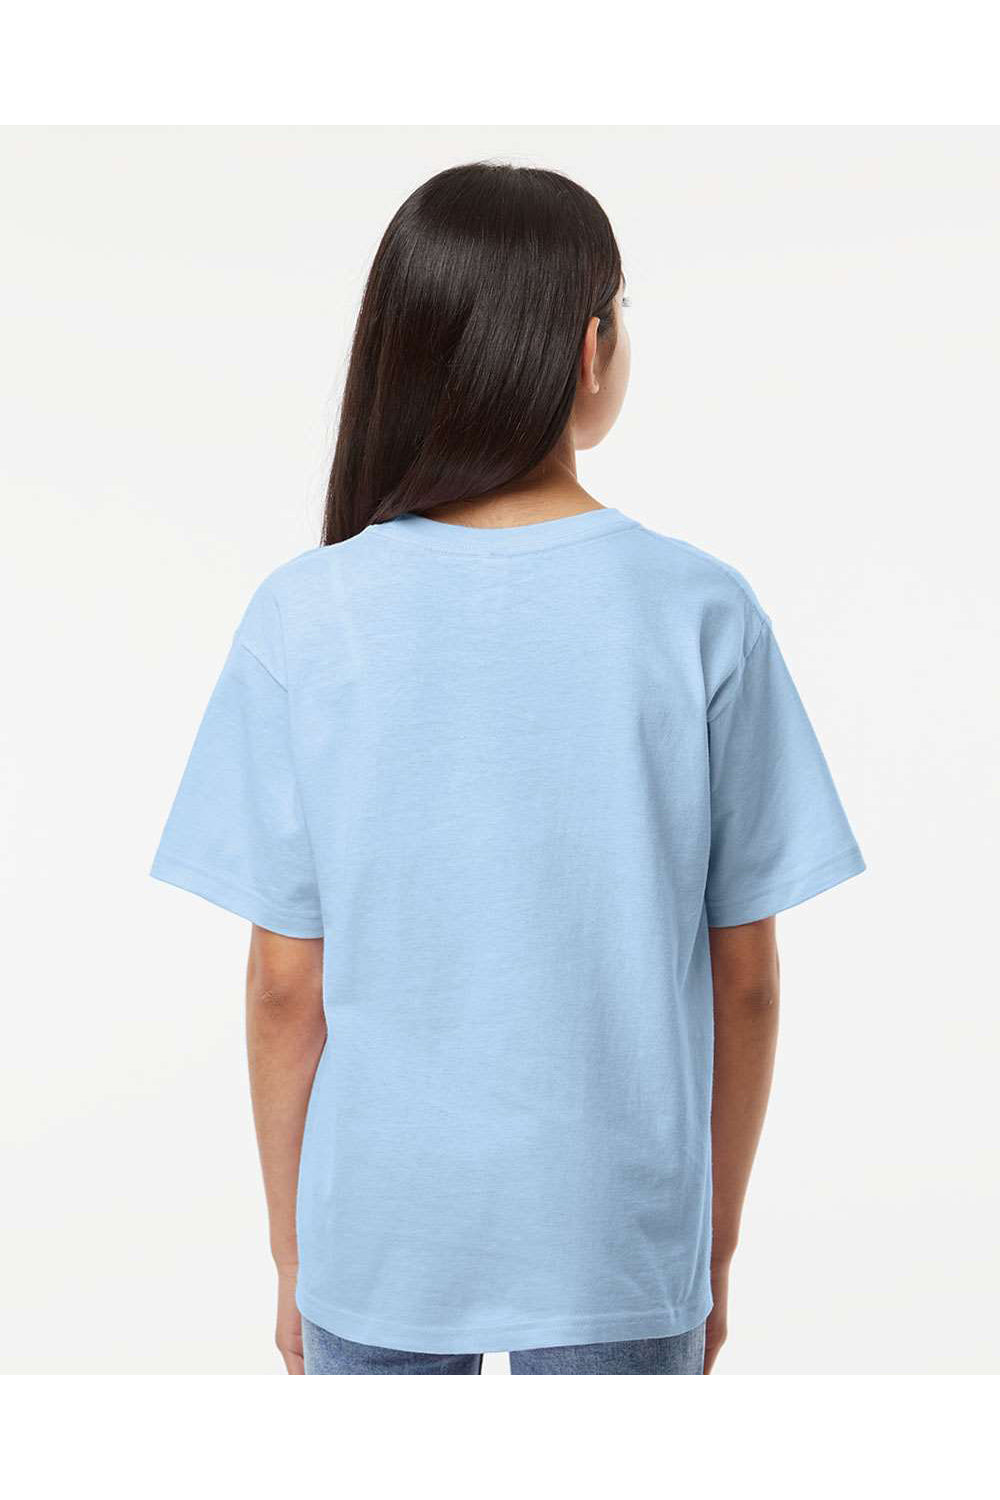 M&O 4850 Youth Gold Soft Touch Short Sleeve Crewneck T-Shirt Light Blue Model Back